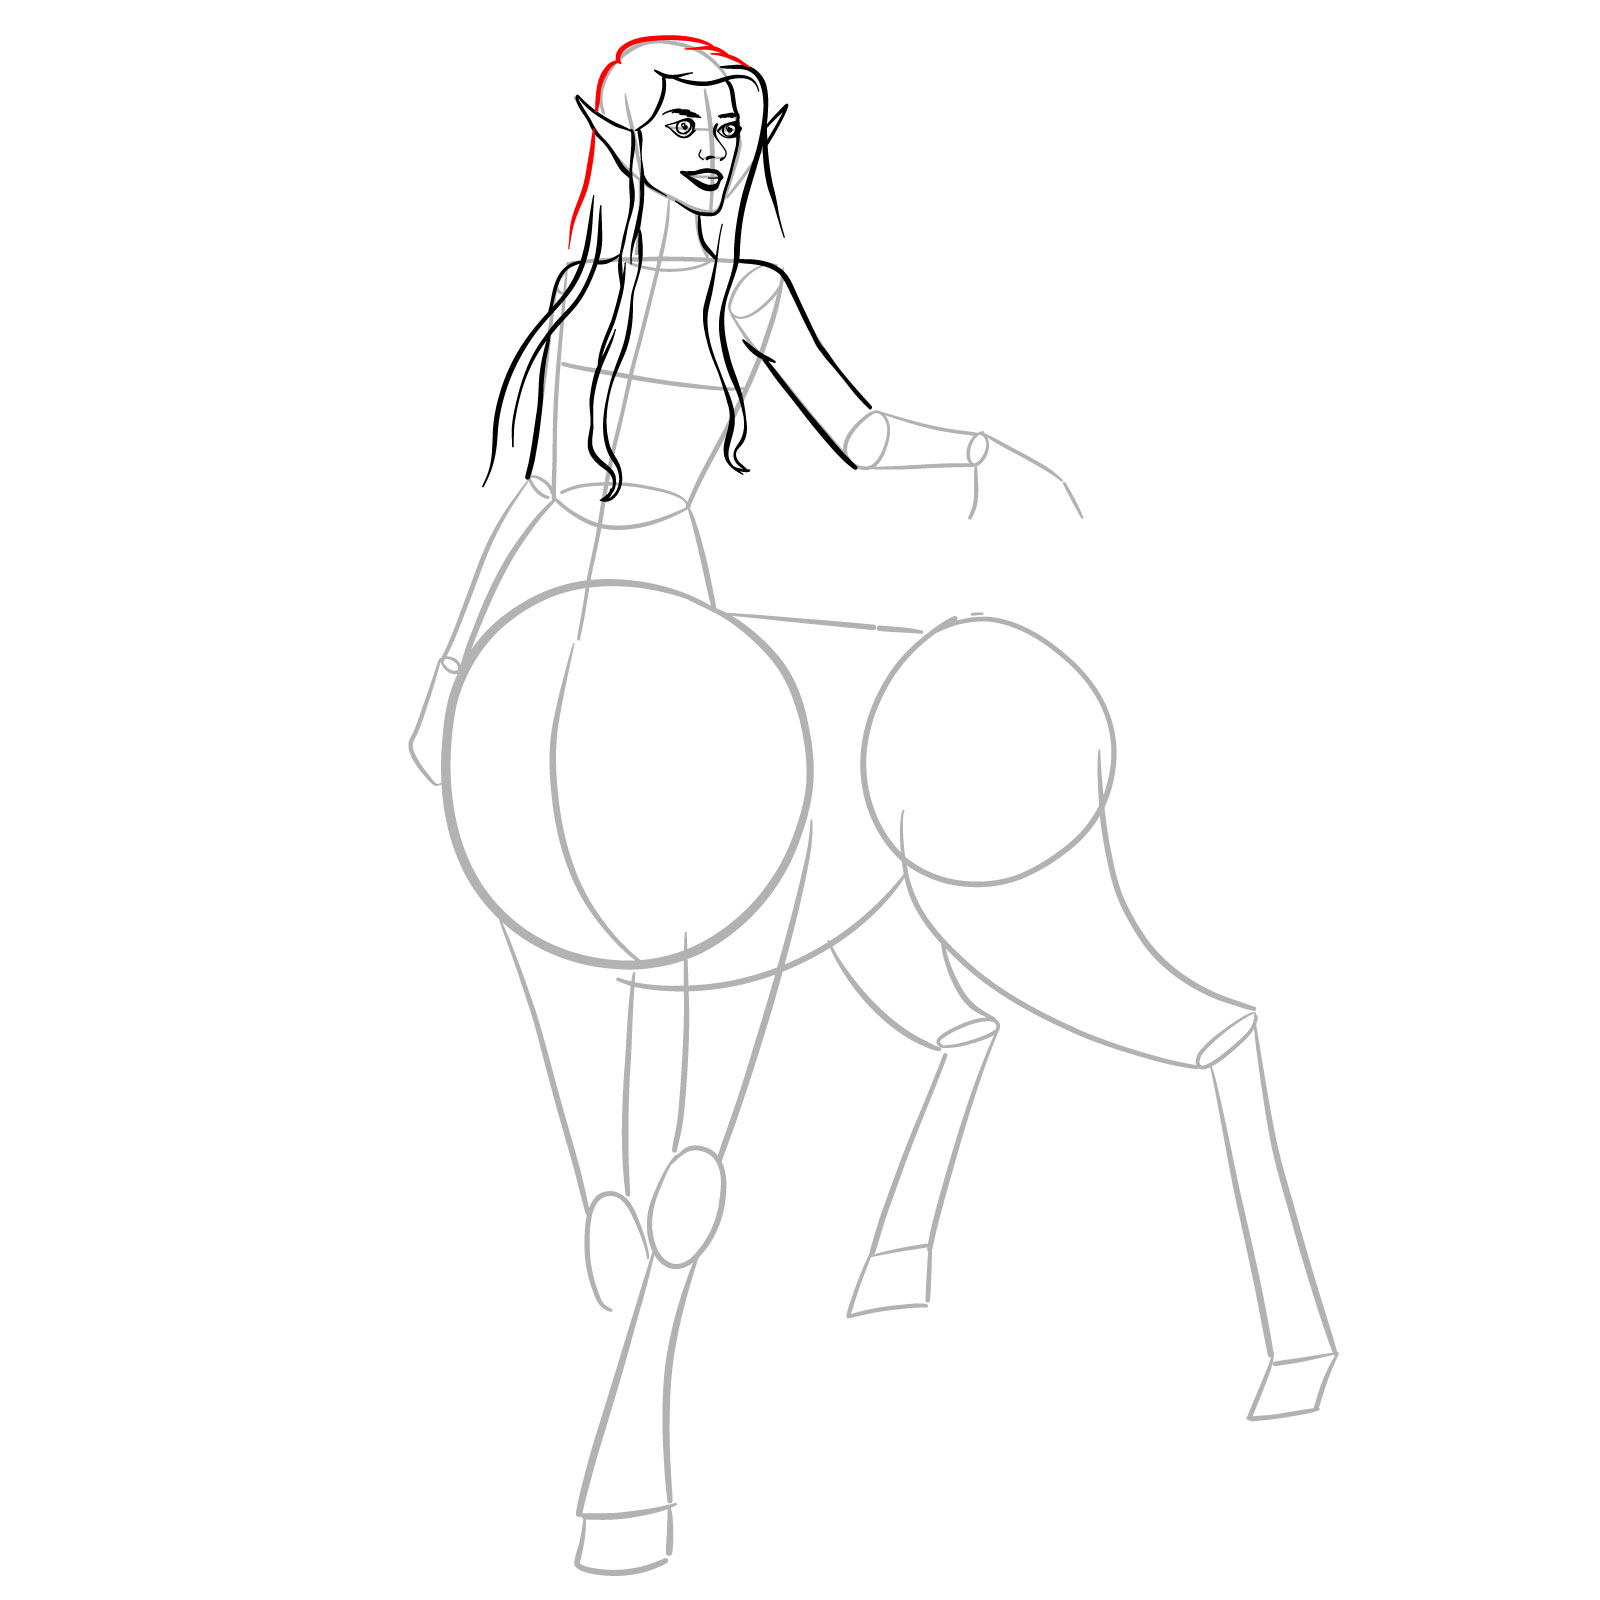 How to draw a Female Centaur - step 17